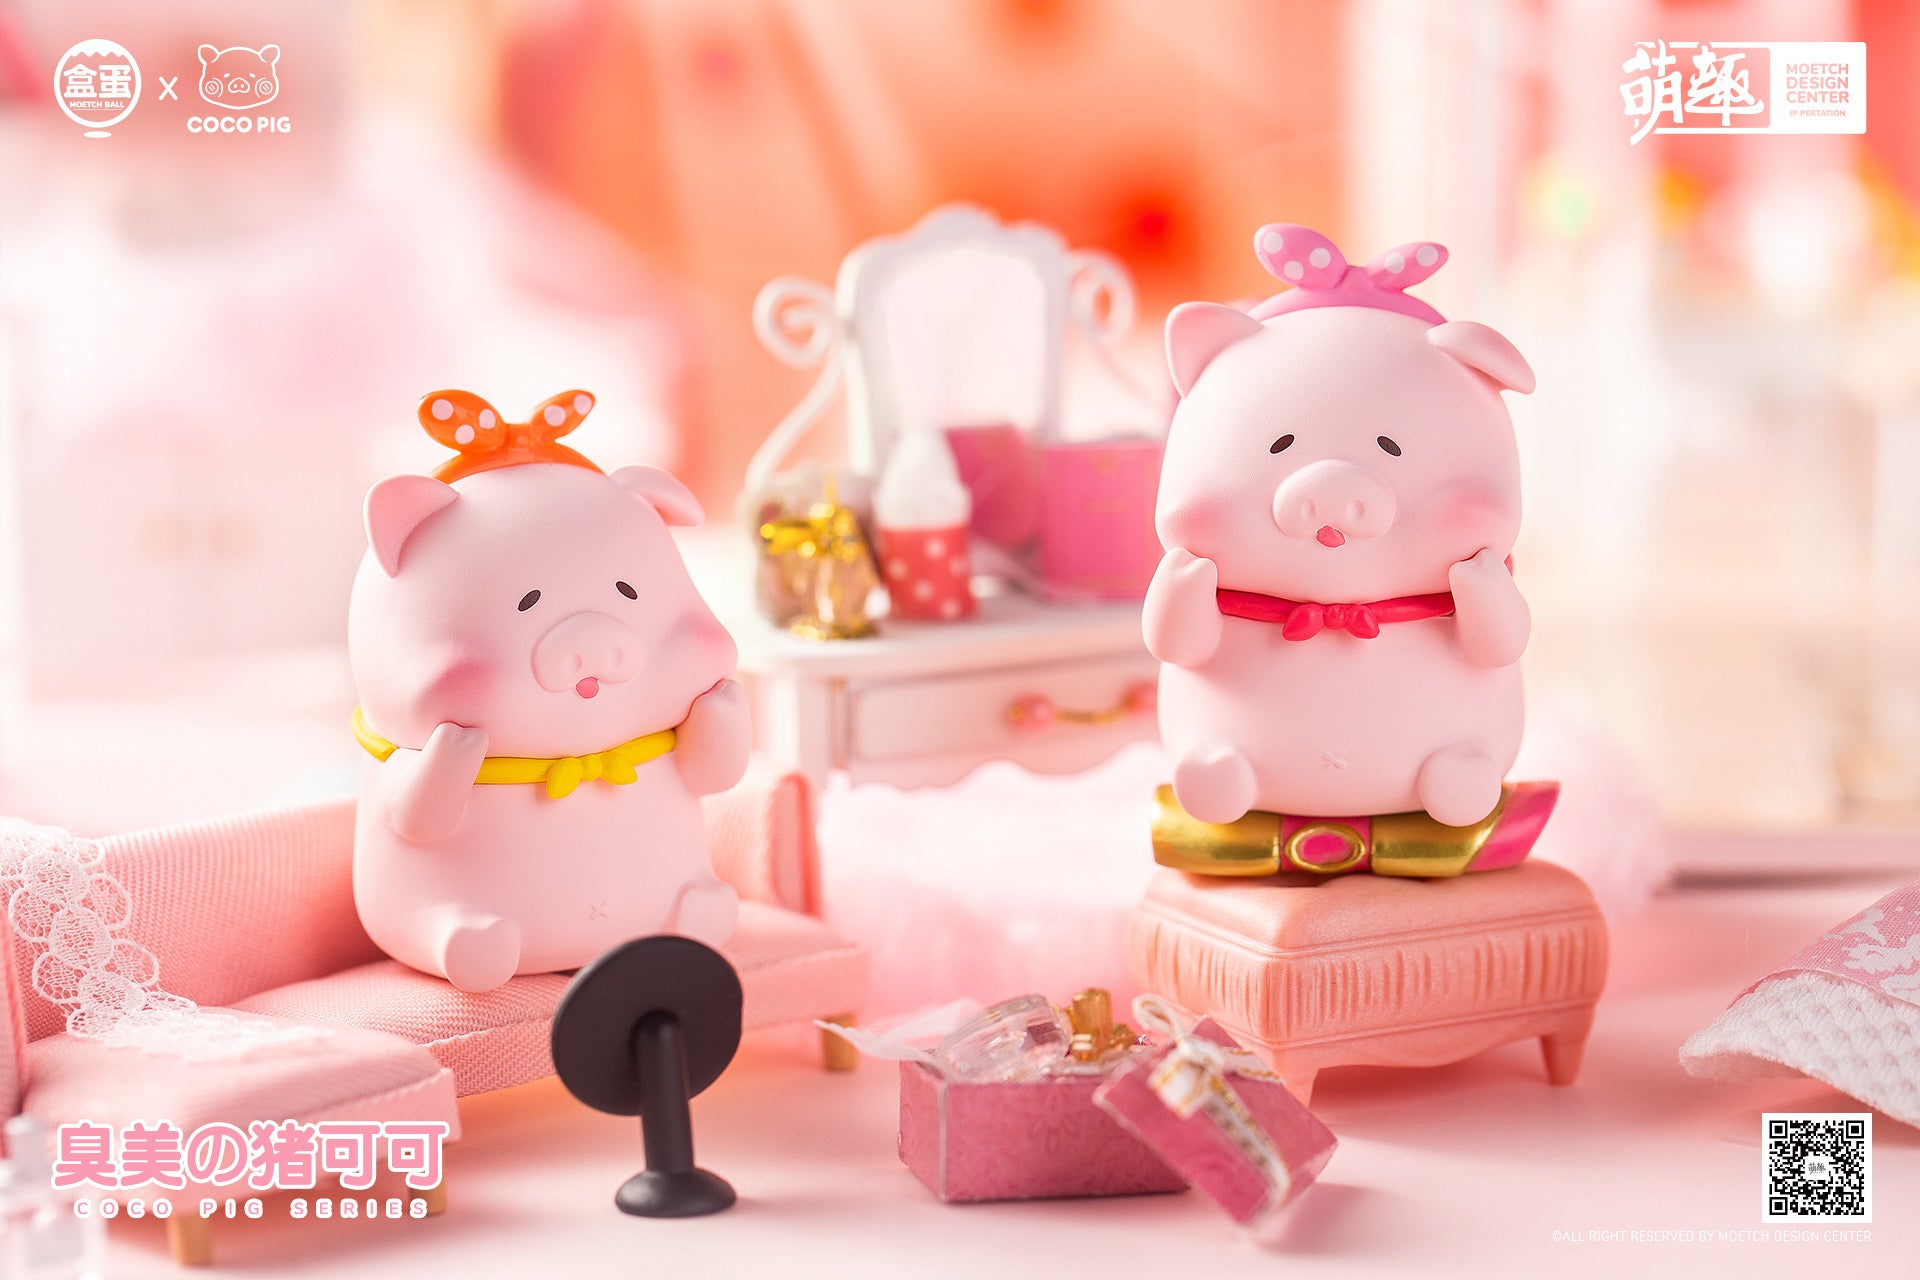 Beautiful CoCo Pig Mini Series